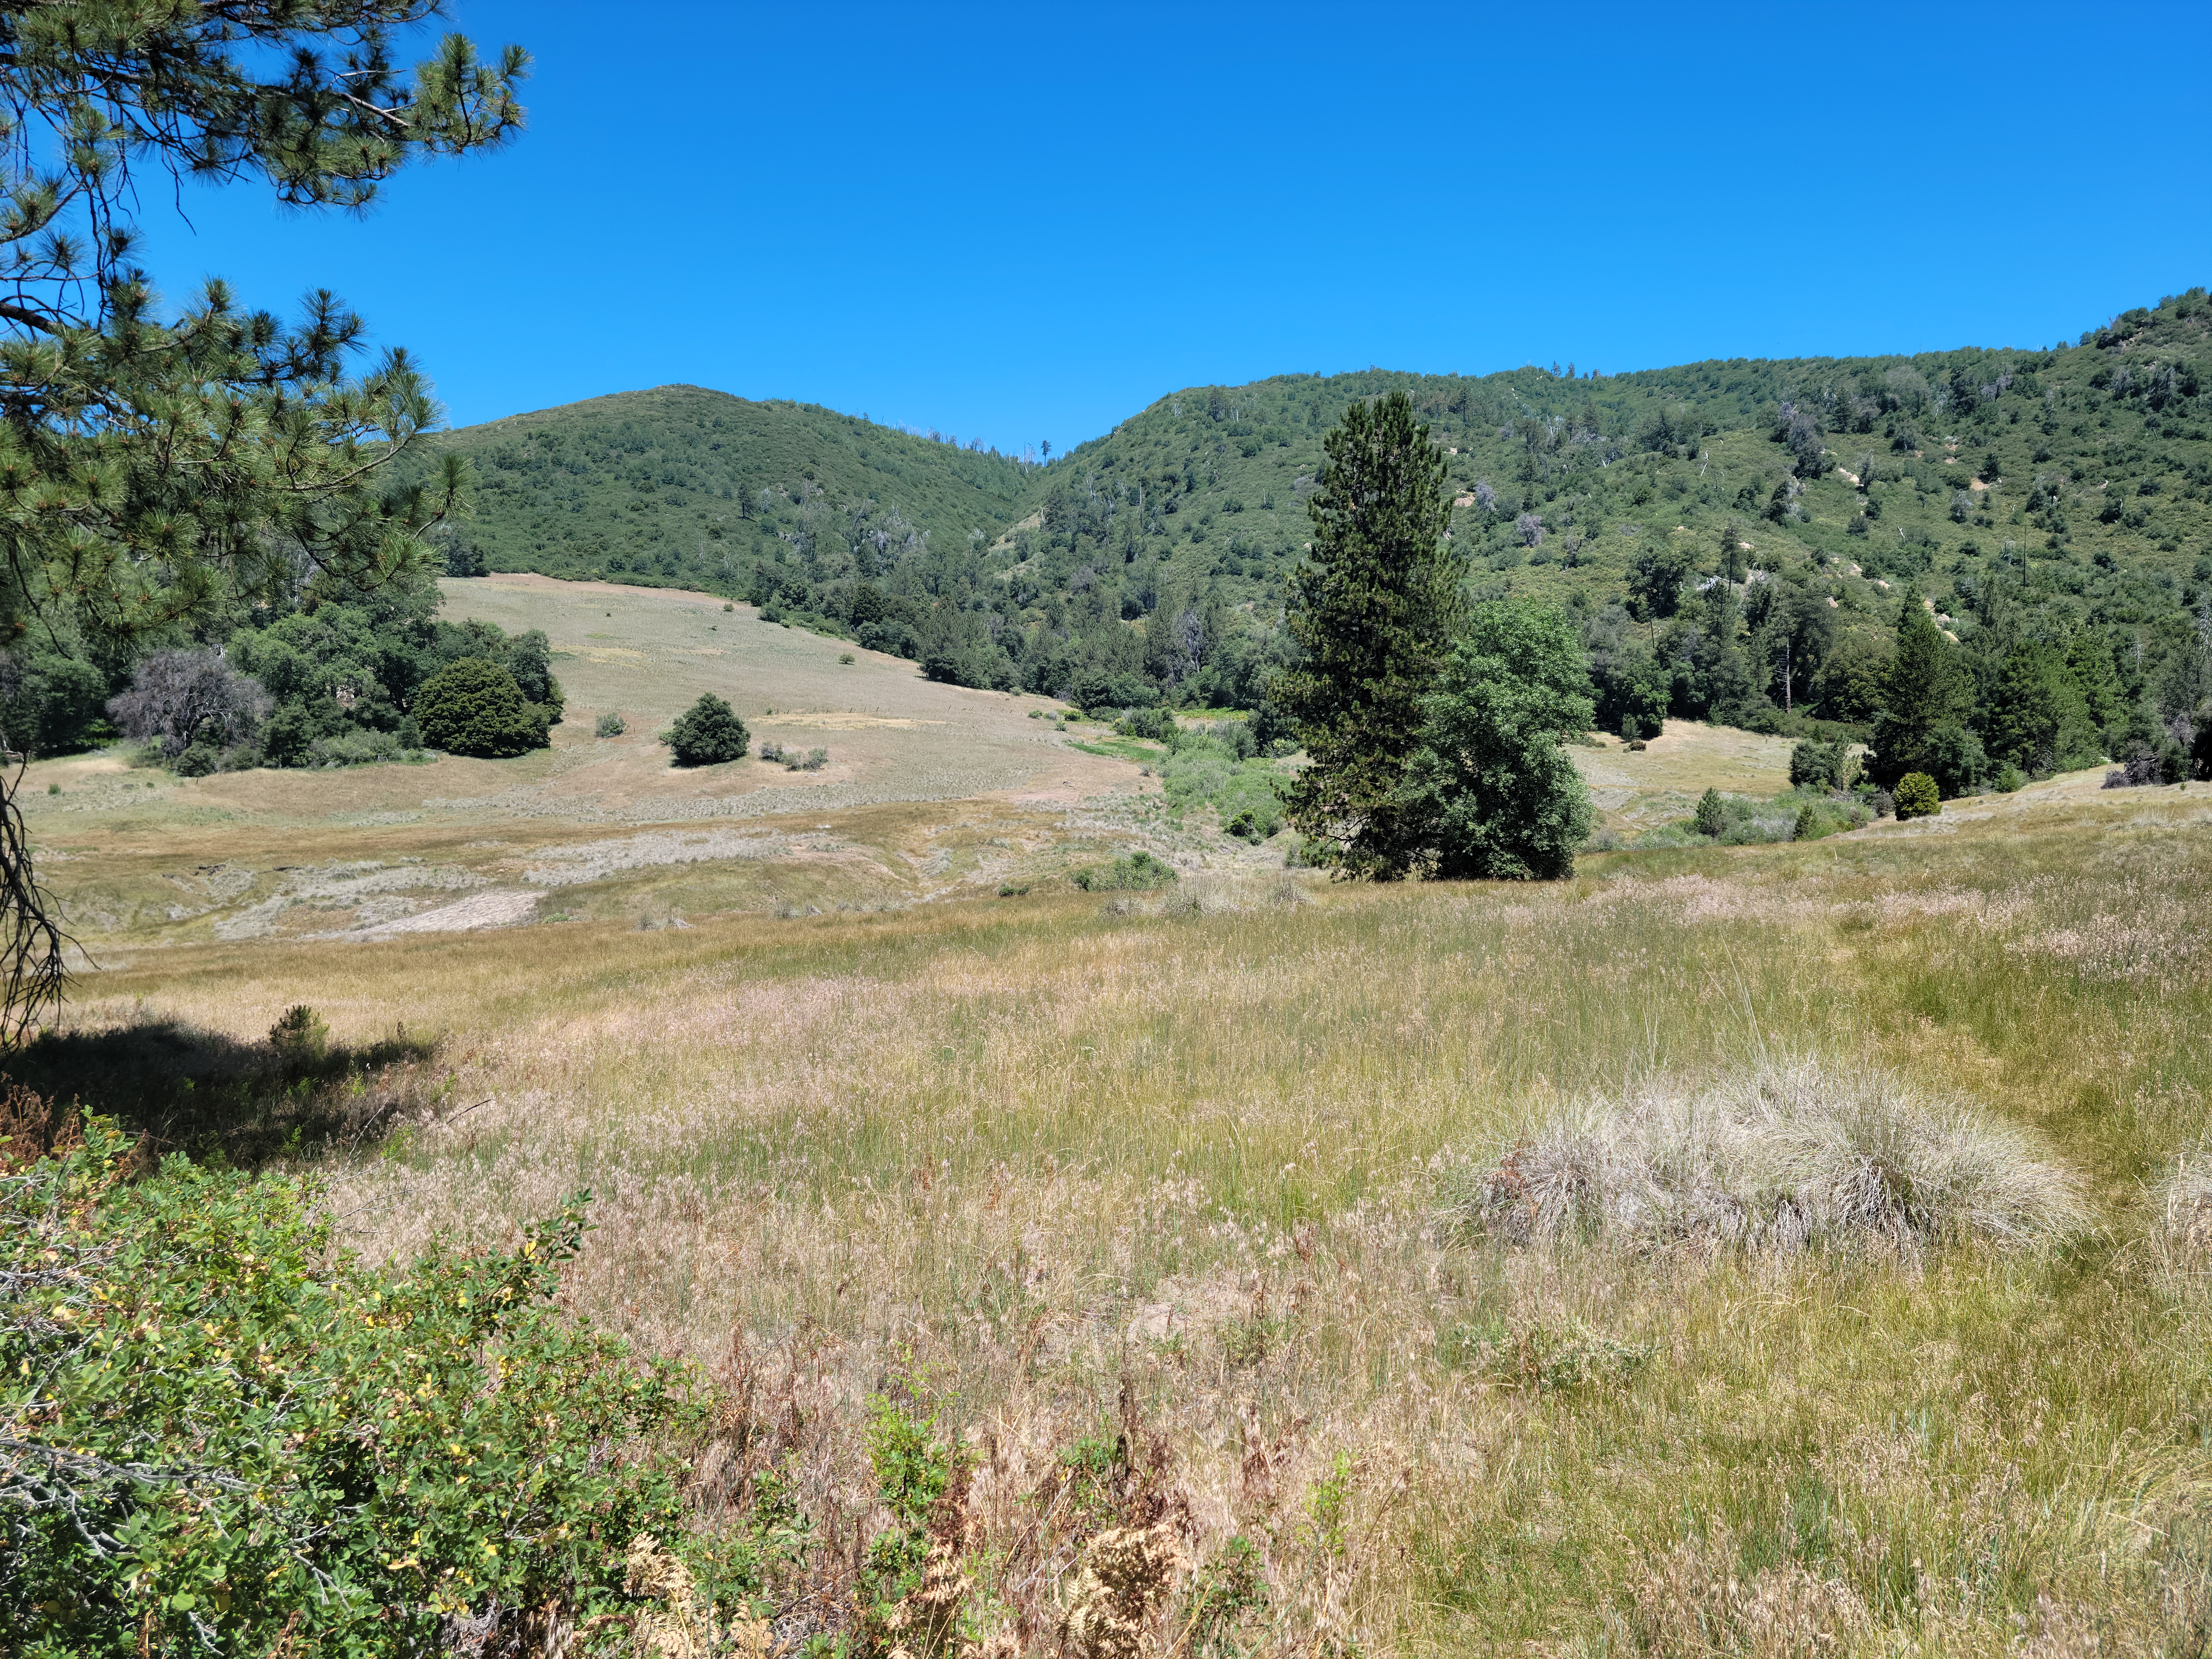 Palomar Mountain Hiking Trip in July - Doane Valley by Dr-Pen